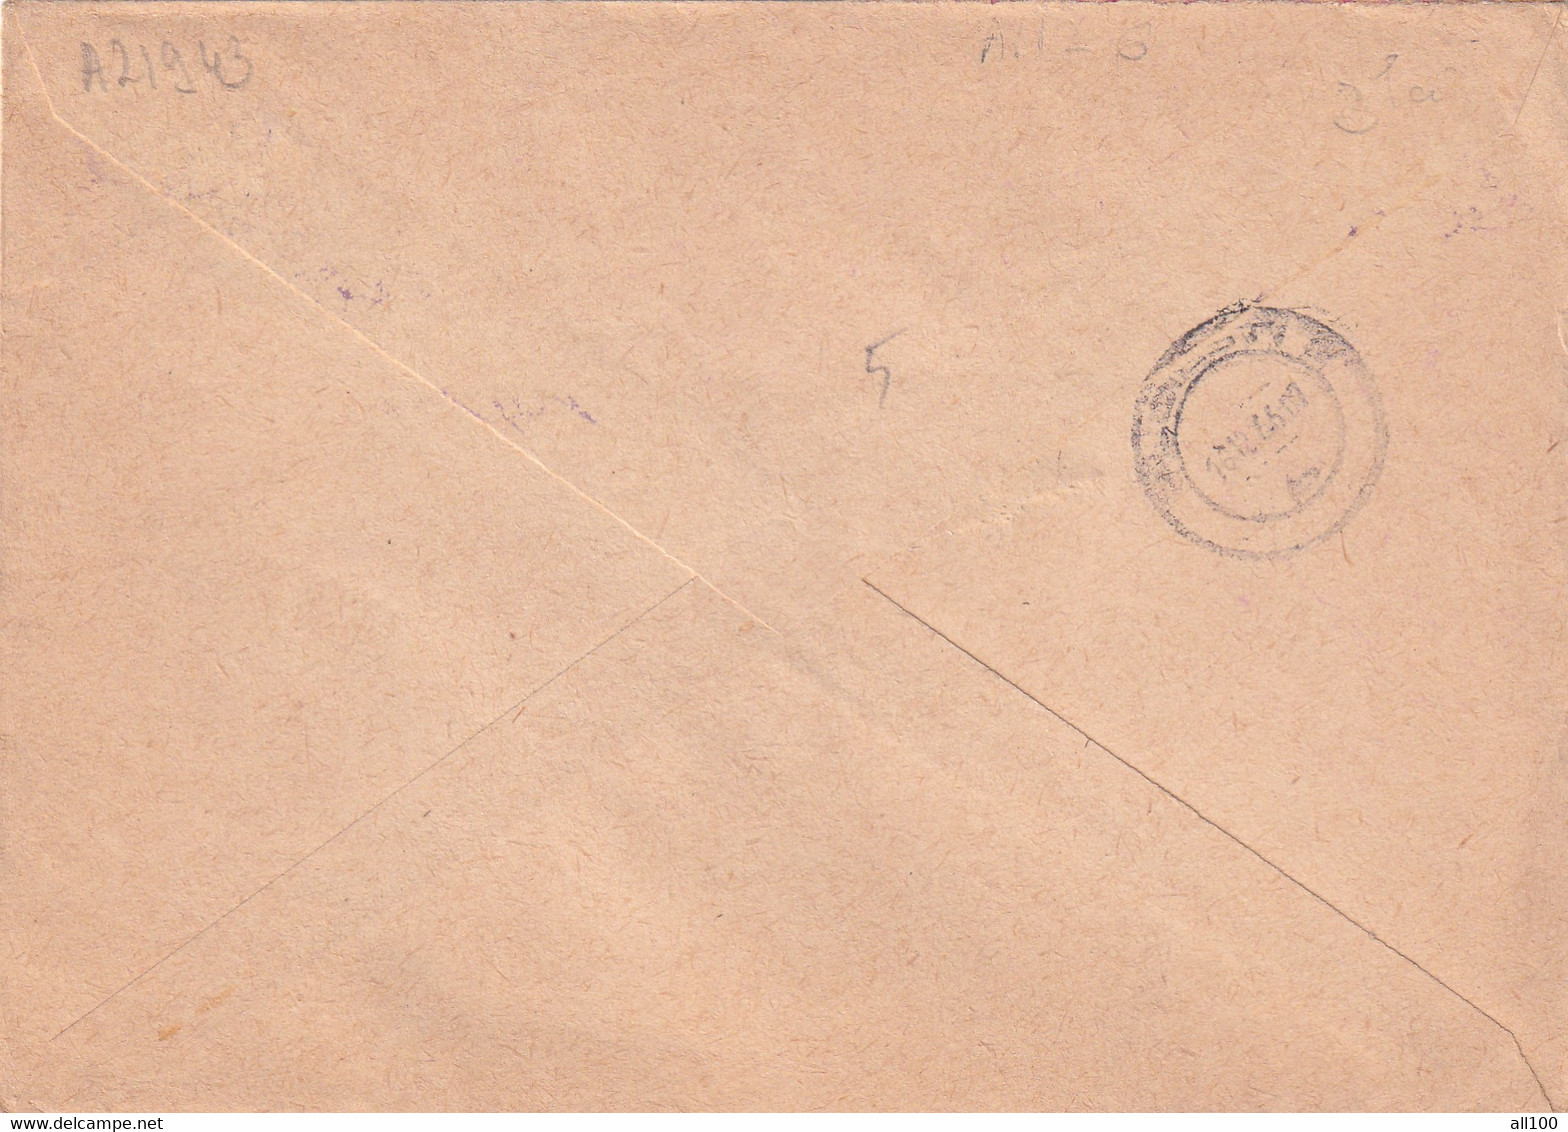 A21943 - Stamp Eduard Vilde Estonian Writer 1965 USSR Mail Soviet Union Cover Envelope Used 1966 Sent To Romania - Storia Postale